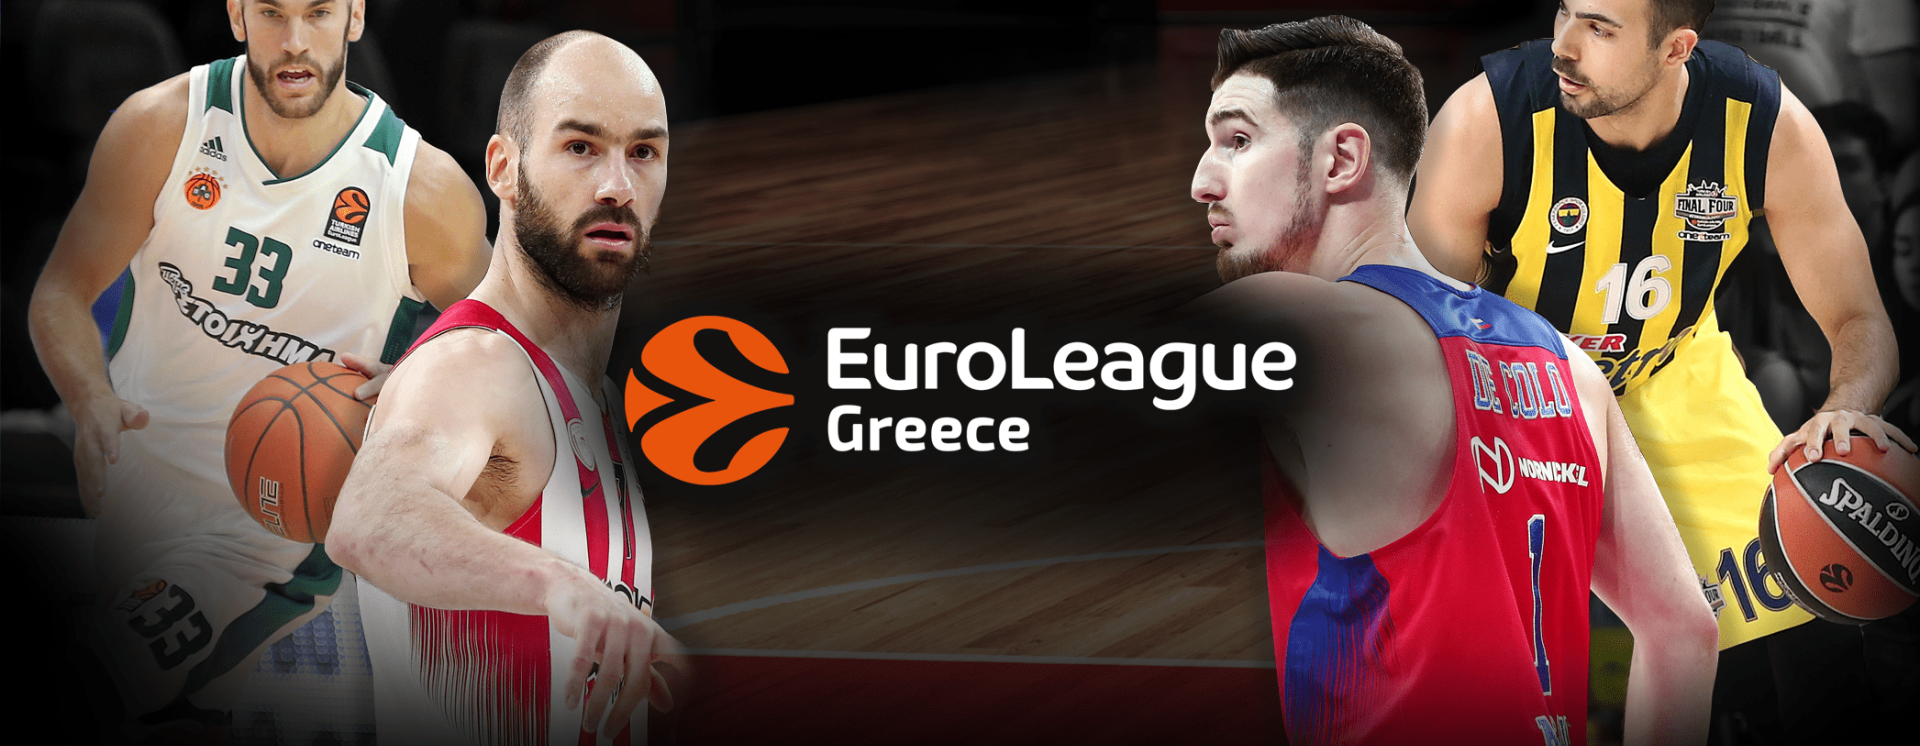 EuroLeague 2017-18: Τα πάντα για την κορυφαία διοργάνωση!